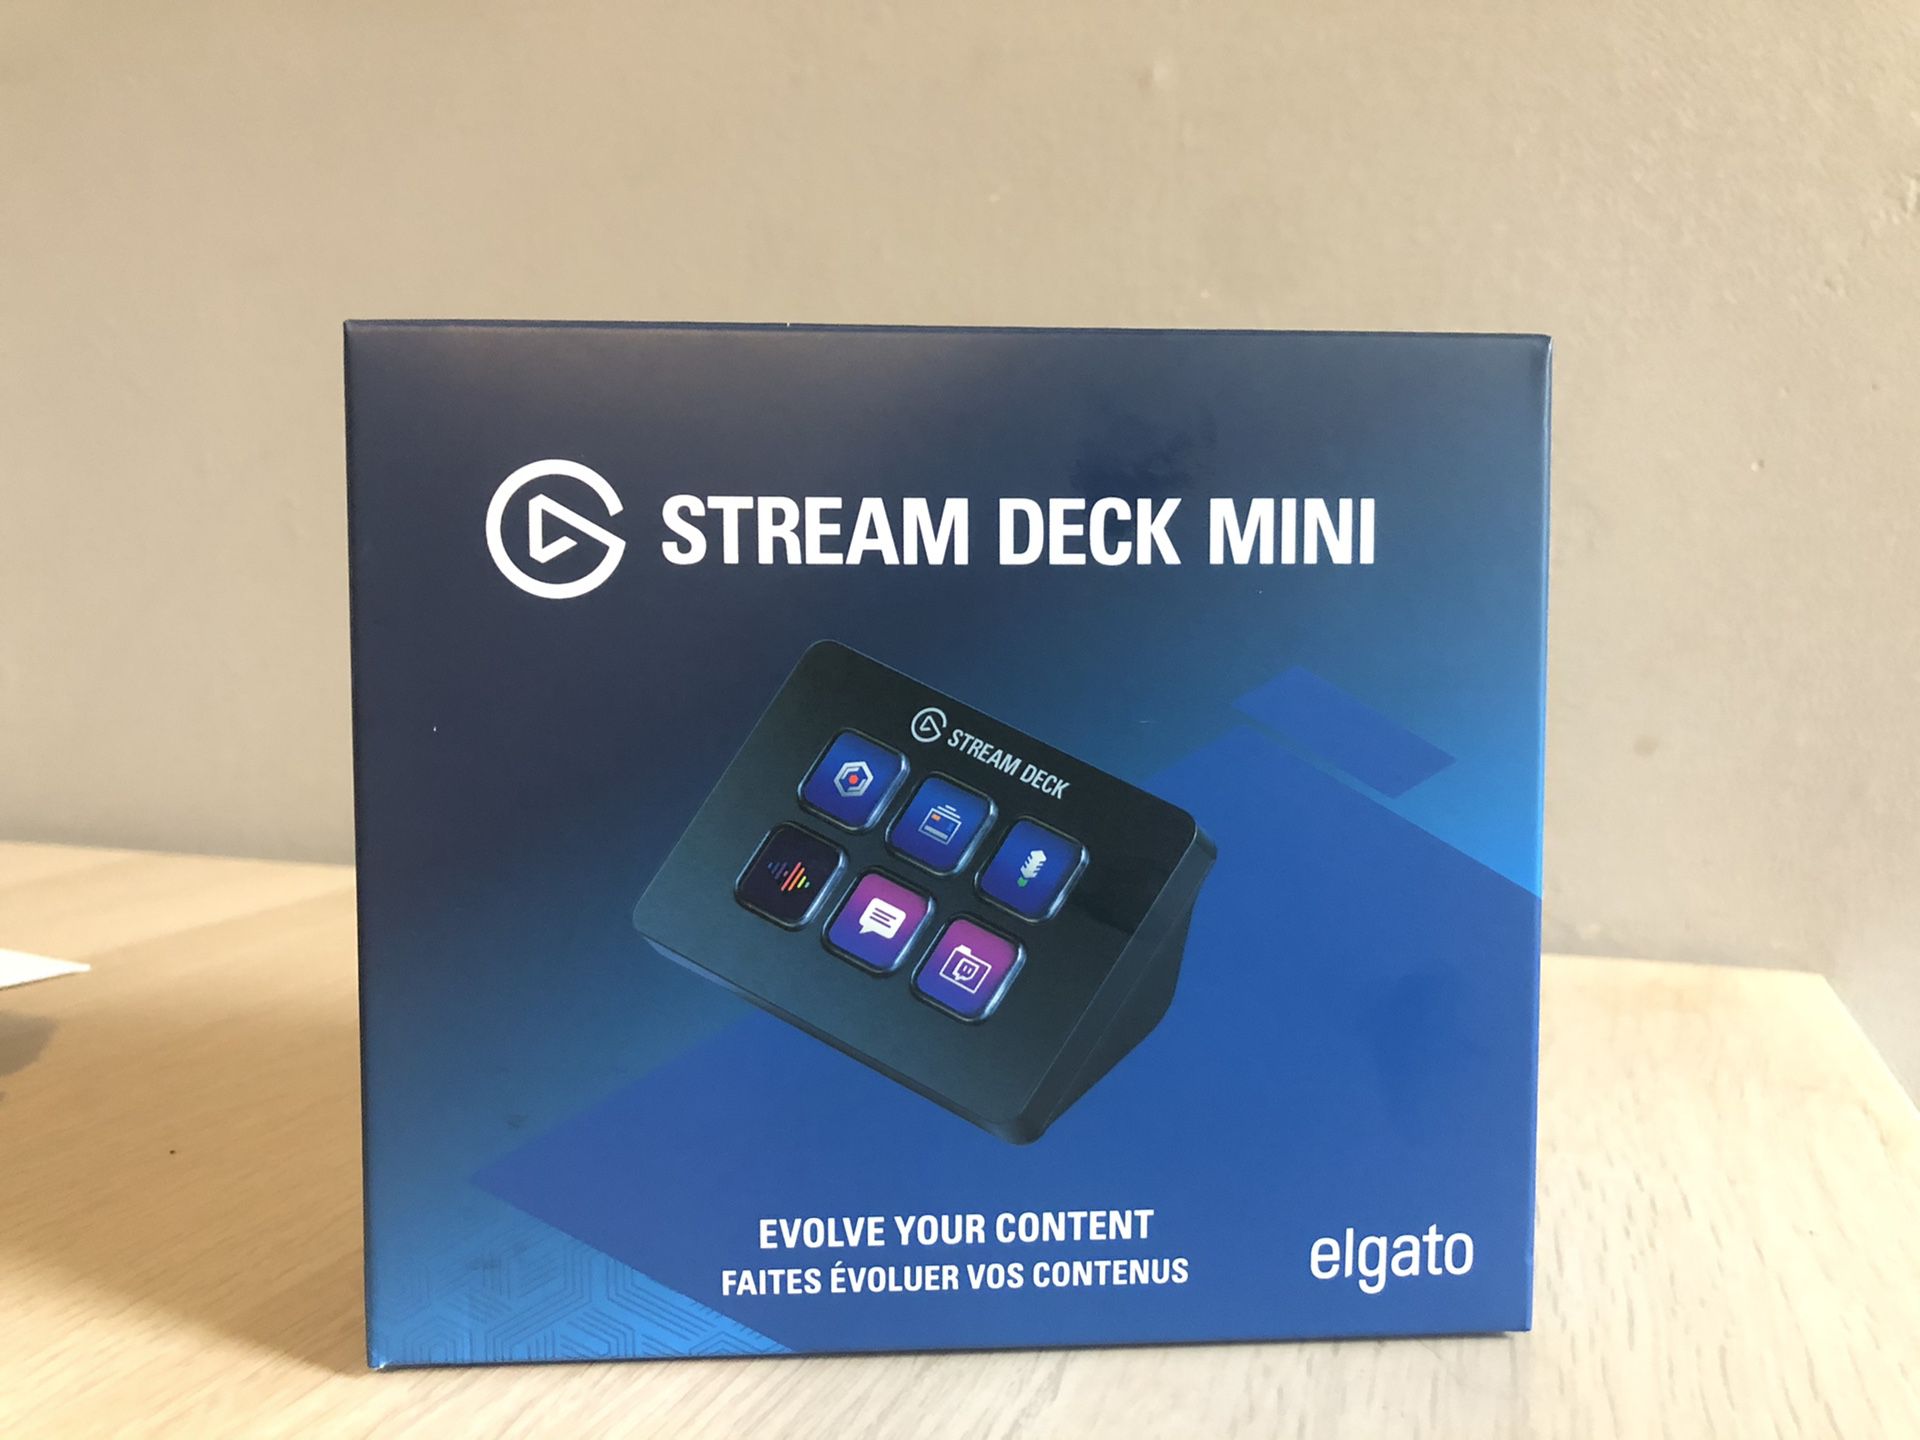 Stream deck mini.